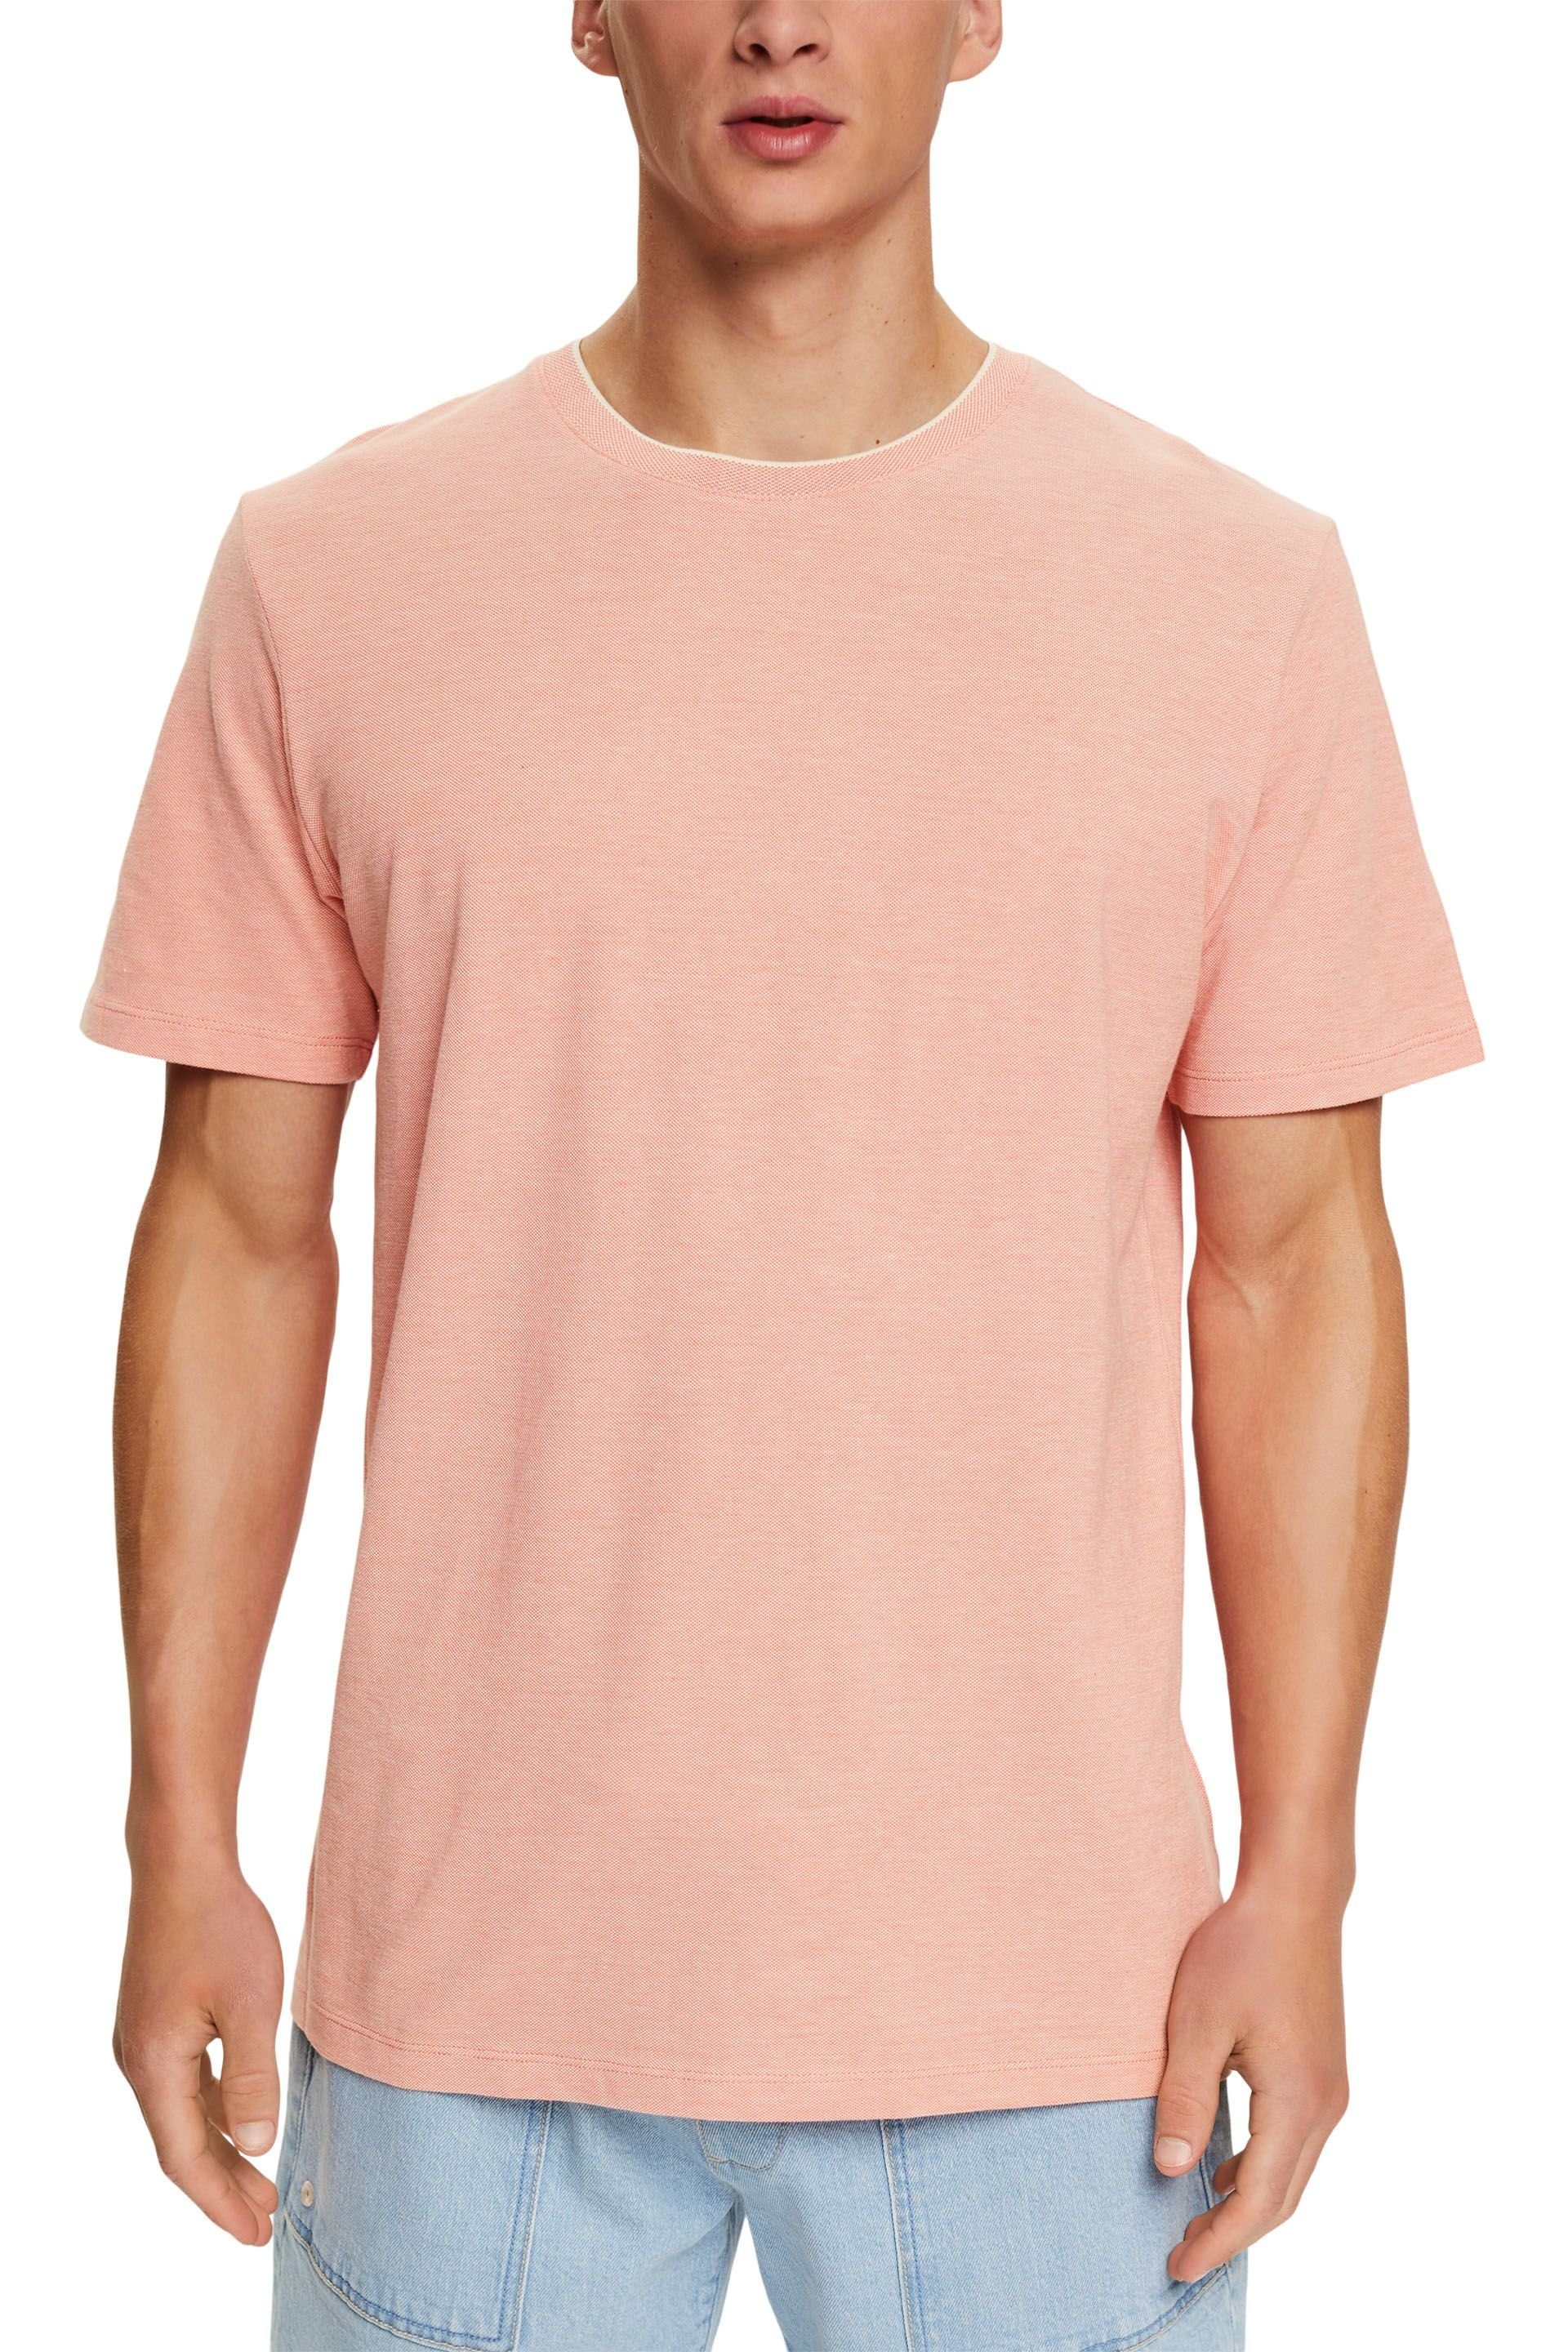 Esprit T-Shirt coral